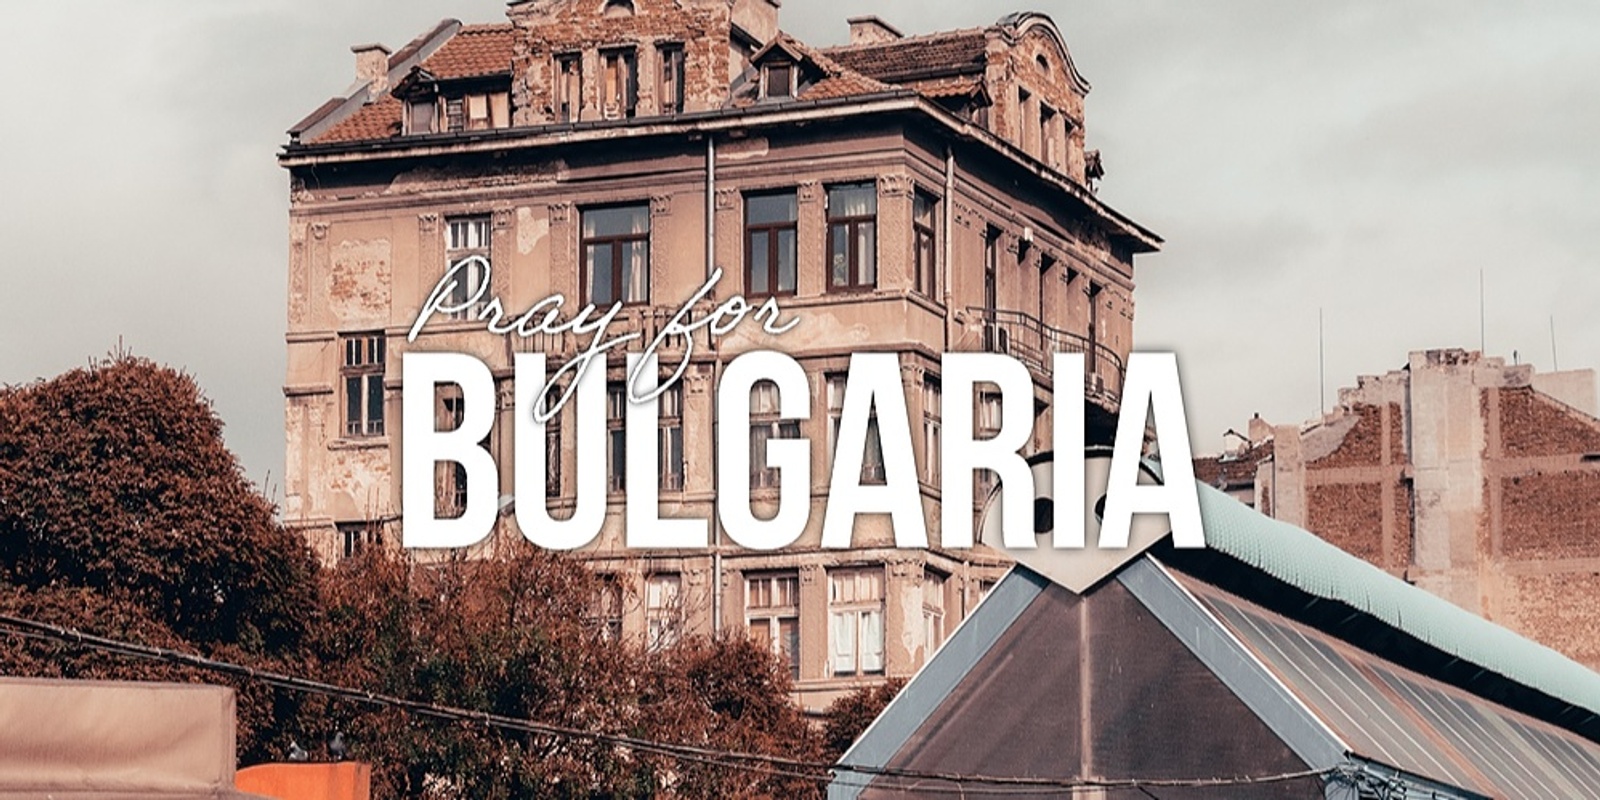 Banner image for Pray for Bulgaria